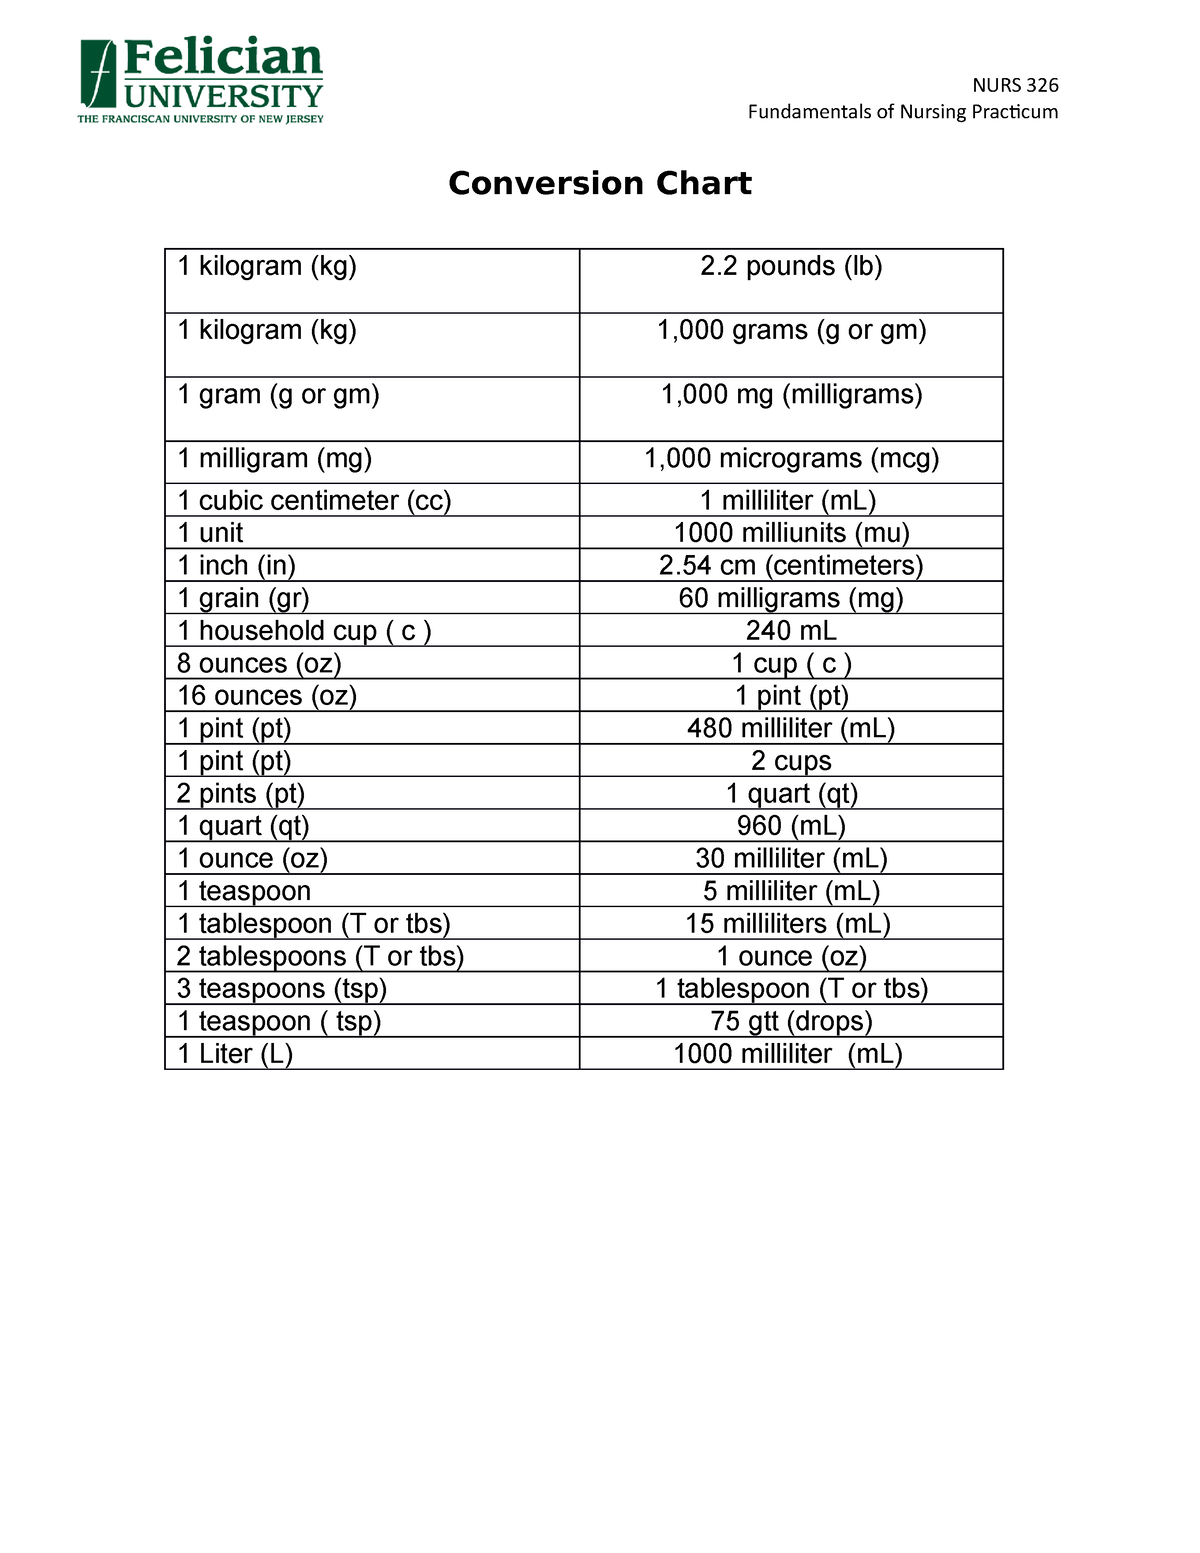 conversion-chart-nurs-326-fundamentals-of-nursing-practicum-conversion-chart-1-kilogram-kg-2